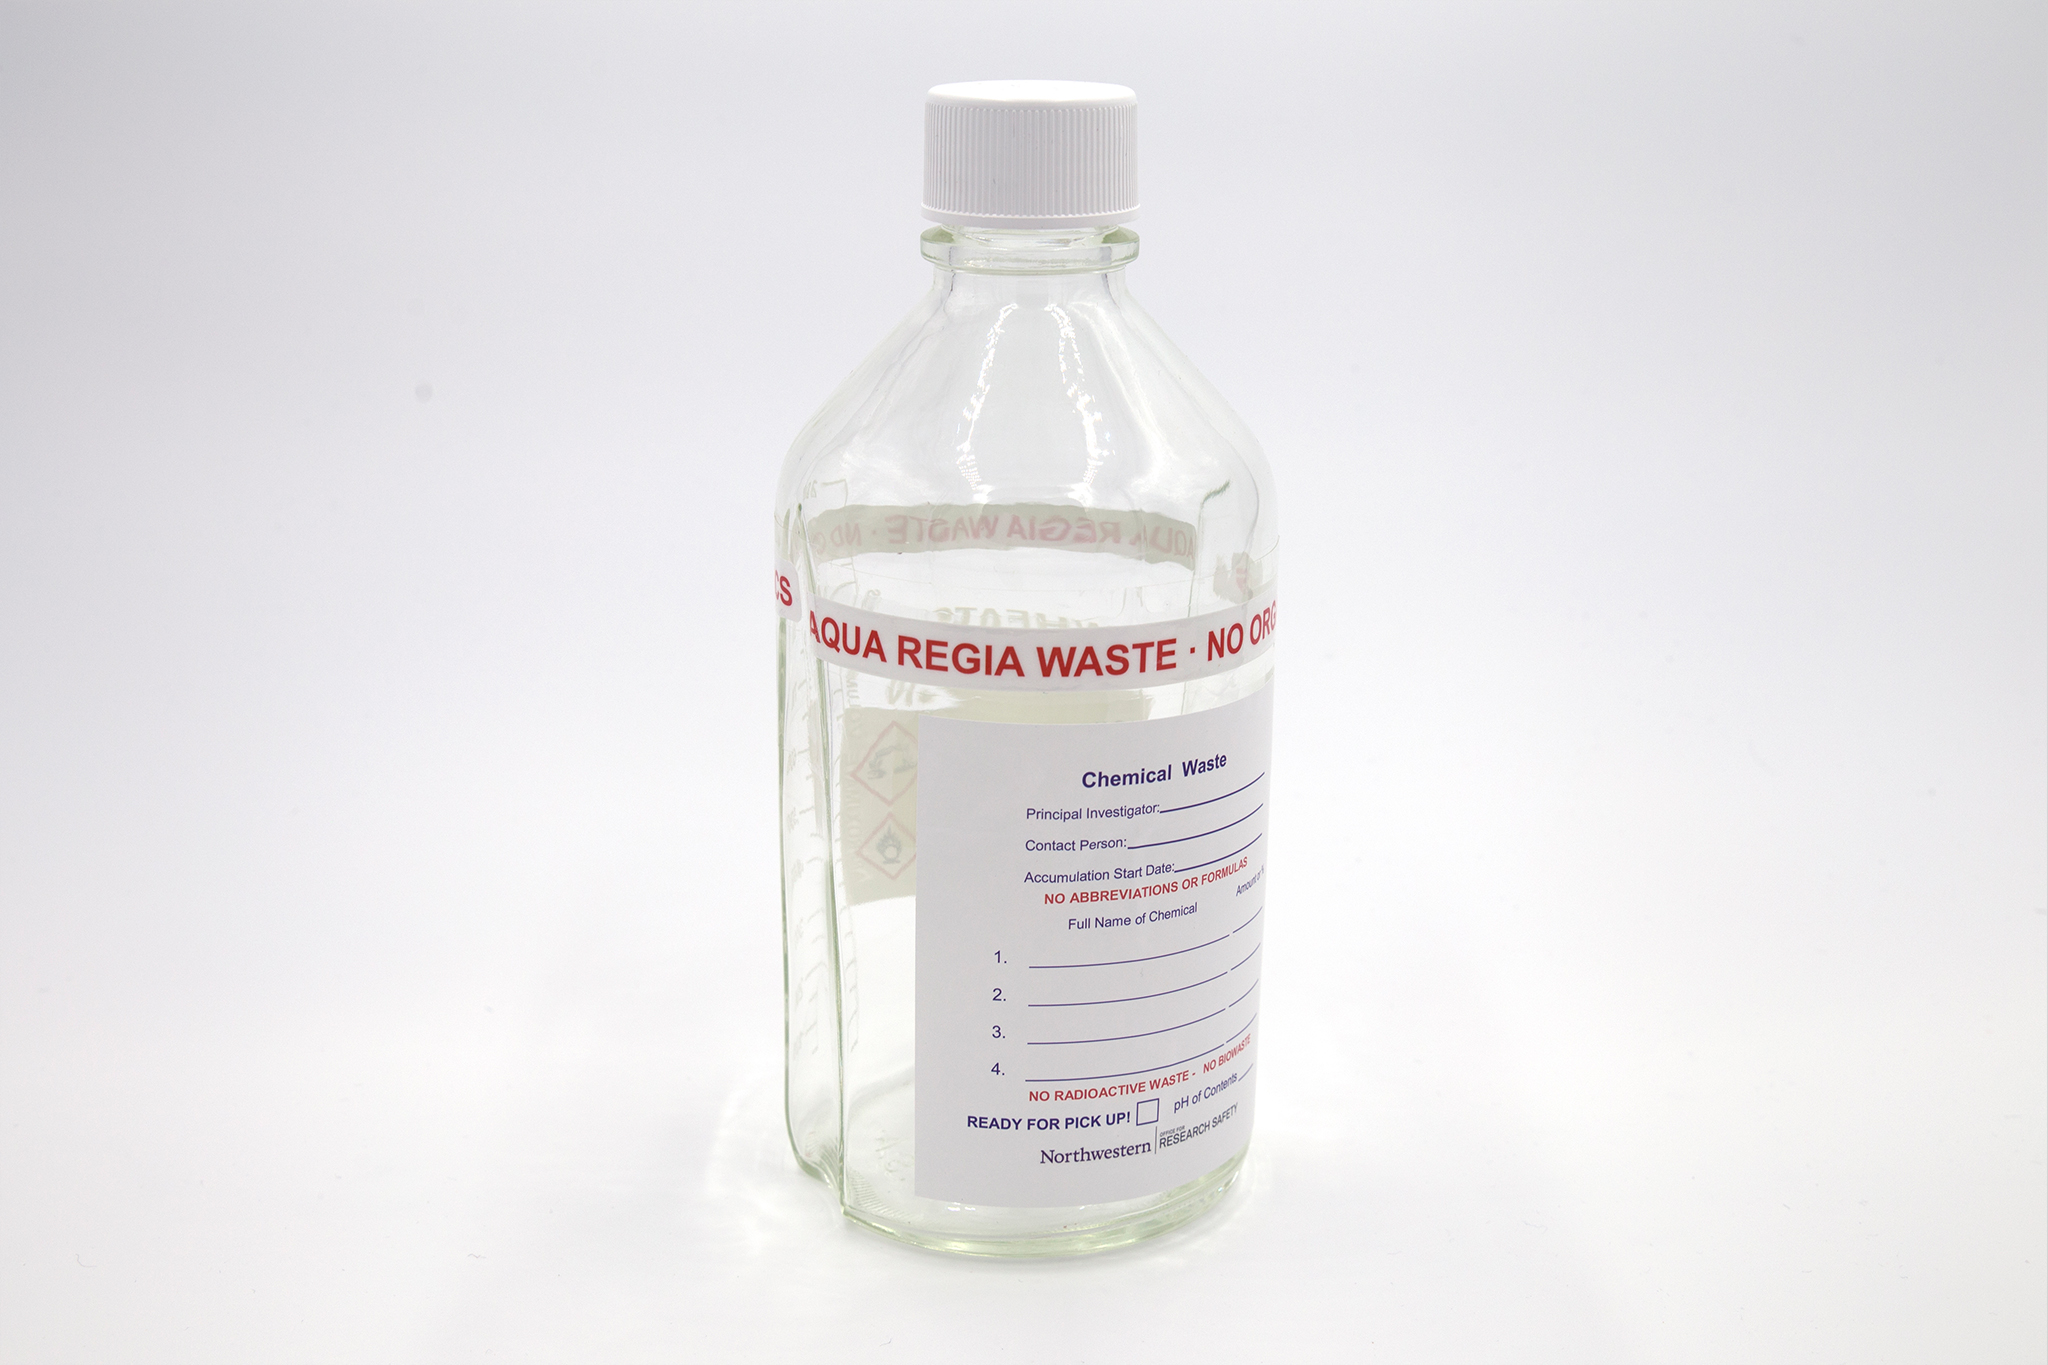 Clear glass bottle with aqua regia waste label.